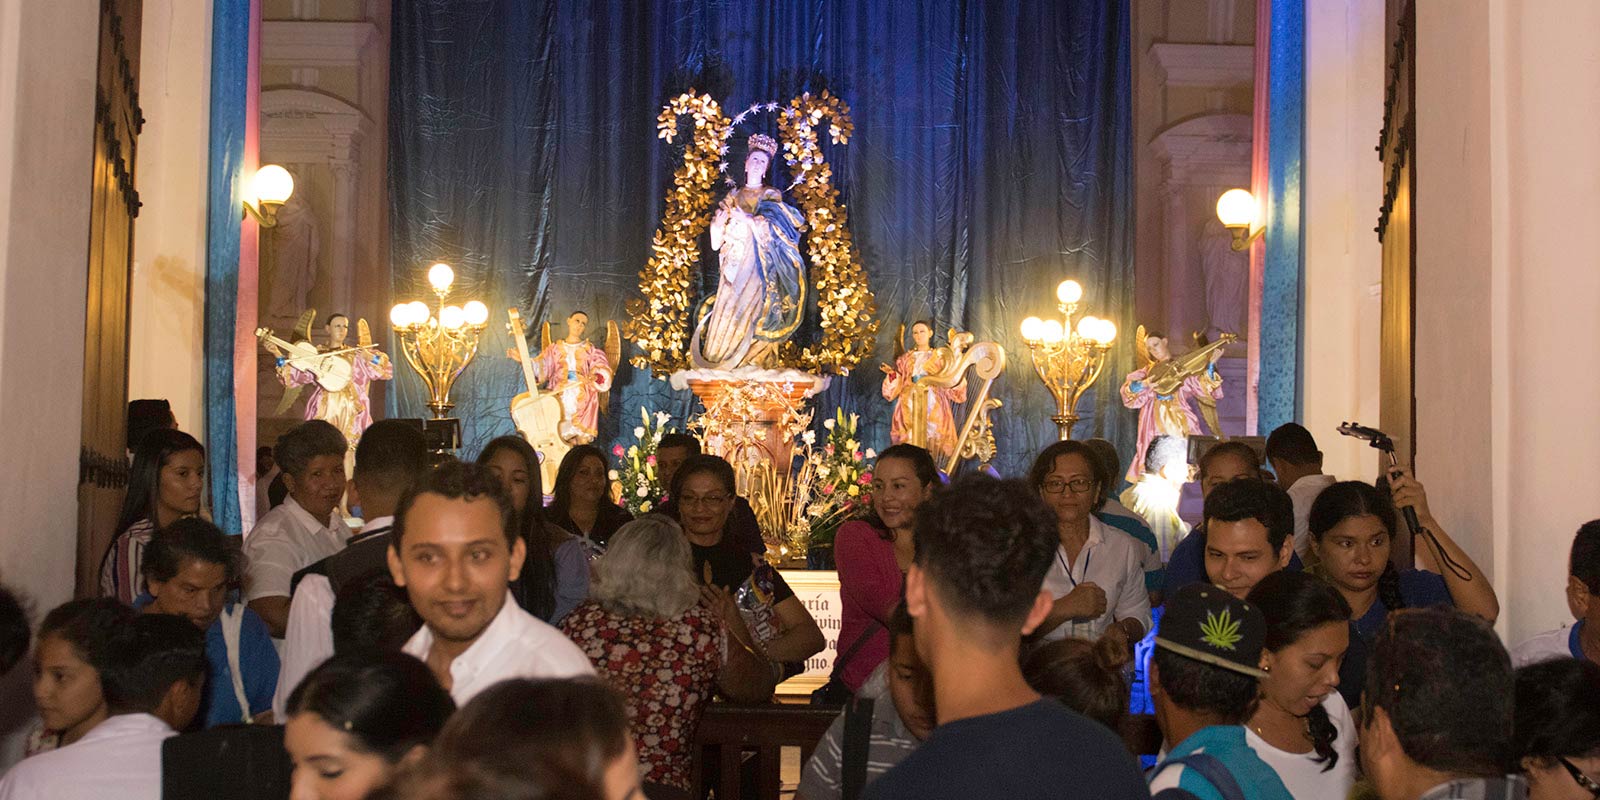 Purisima-Tradiciones-de-Nicaragua-Virgen-Maria